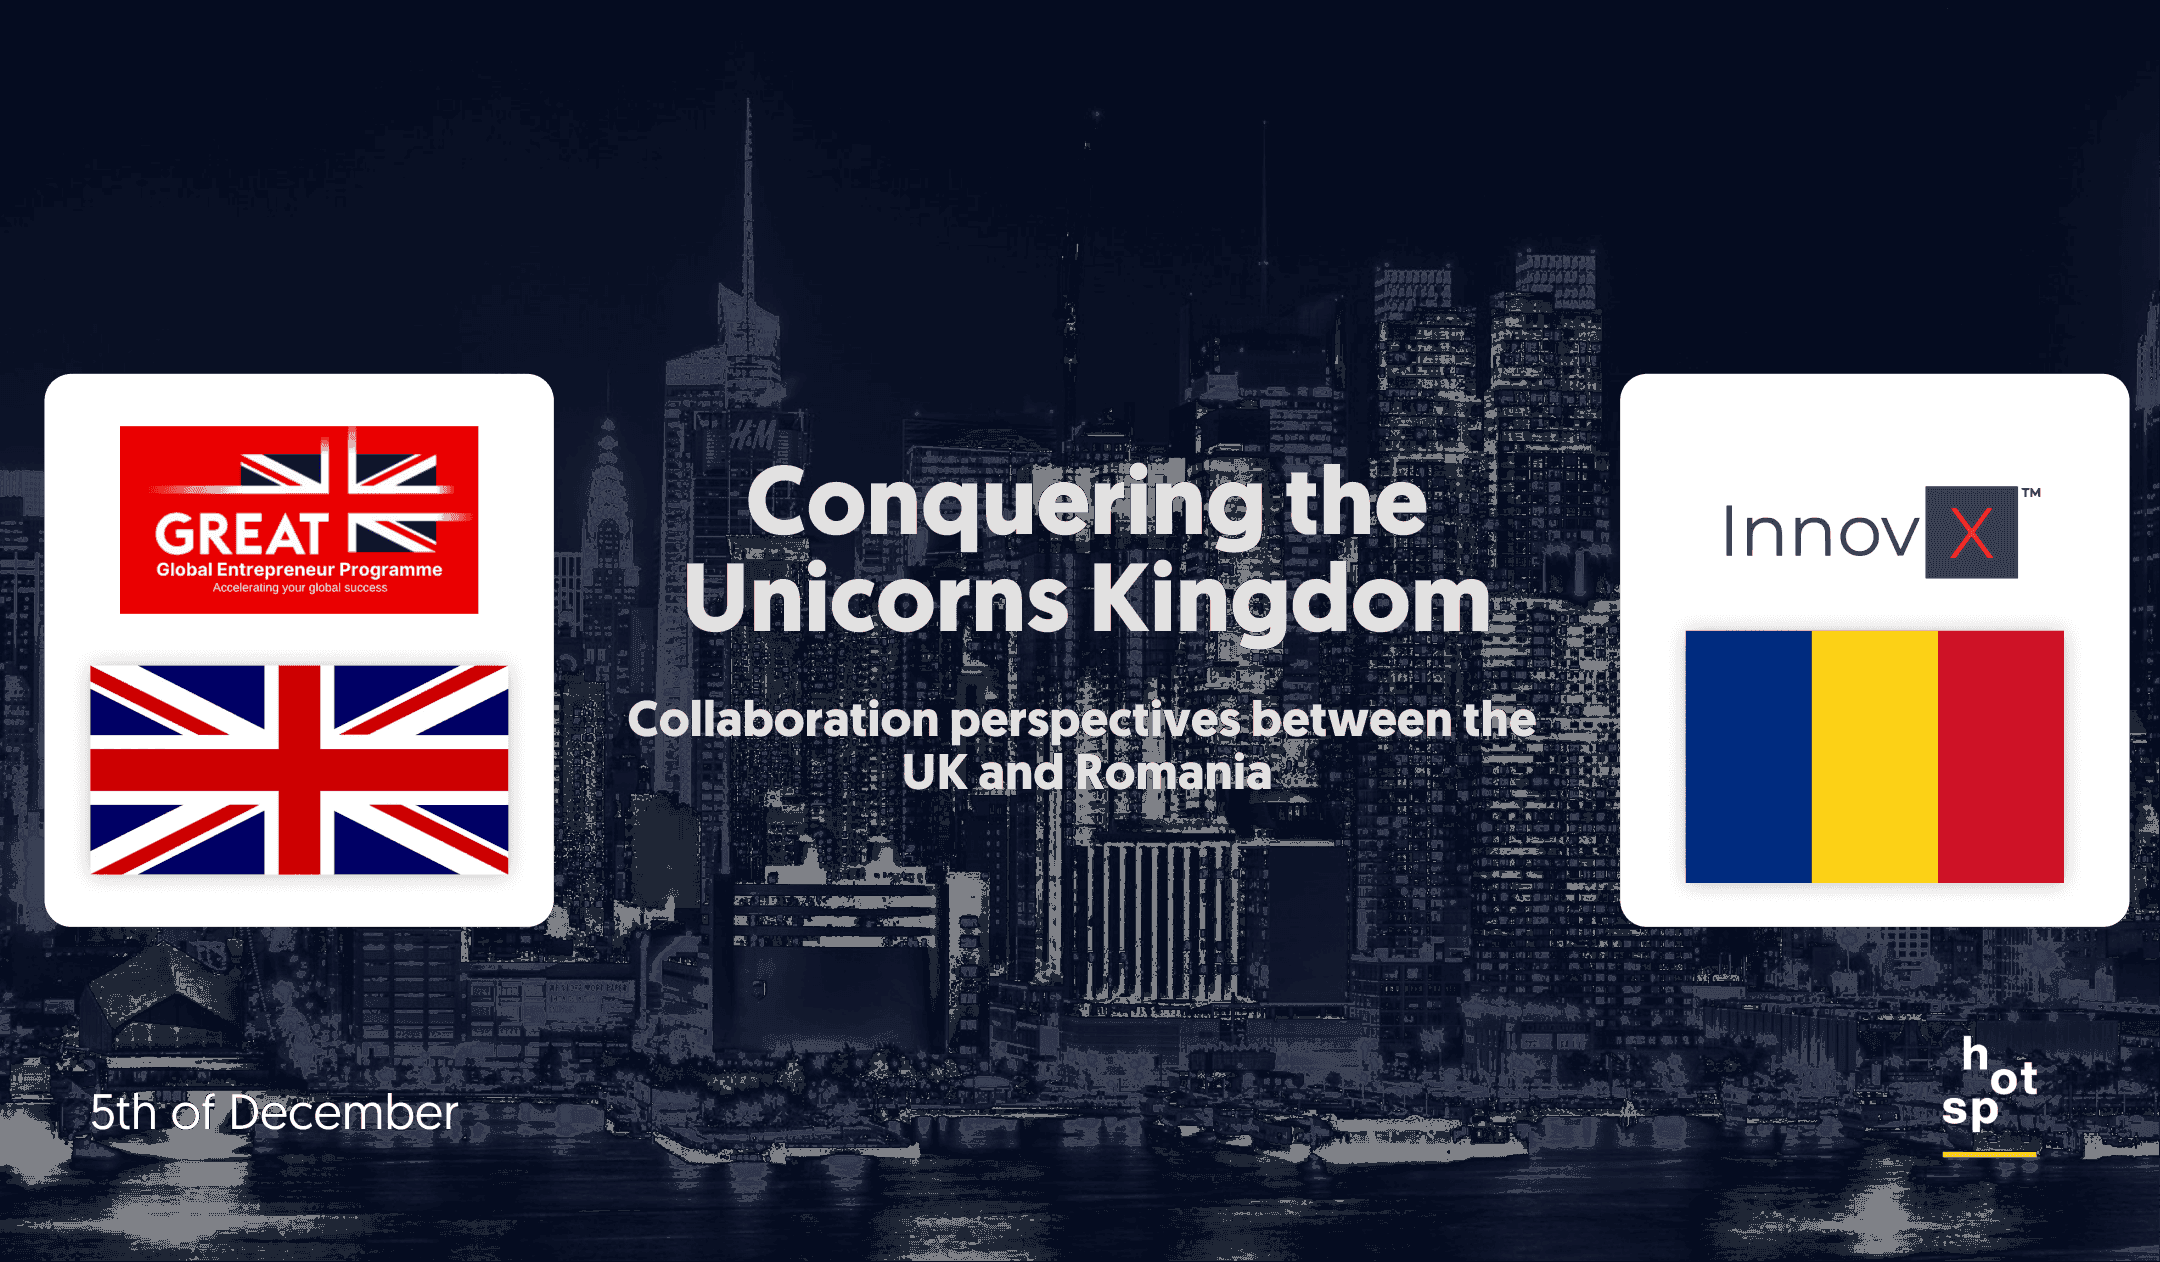  Conquering the Unicorns Kingdom Event Image